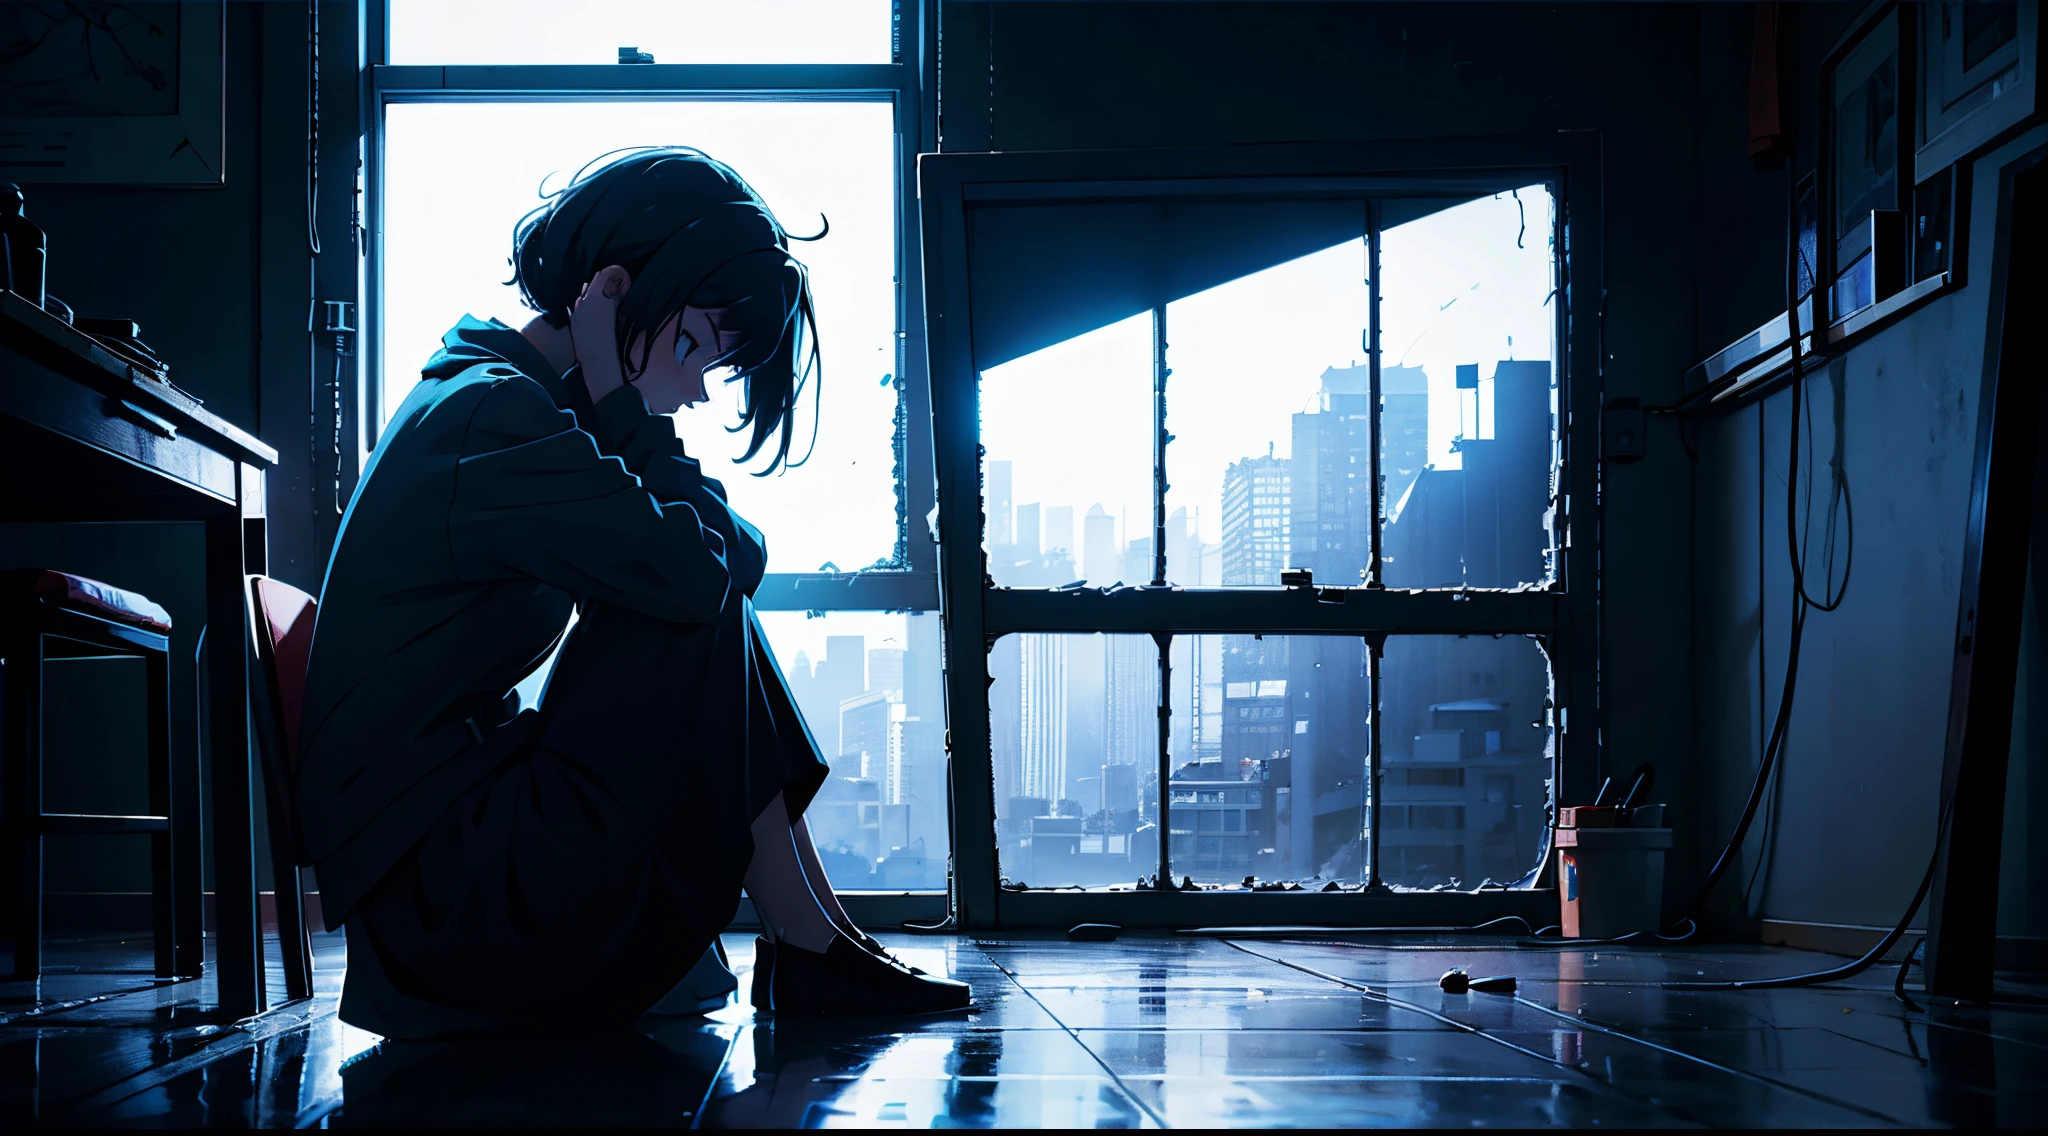 abstract ,Girl sitting in the corner, window light, hands on her head, looking down, dark light, depression, sad theme, long range shot